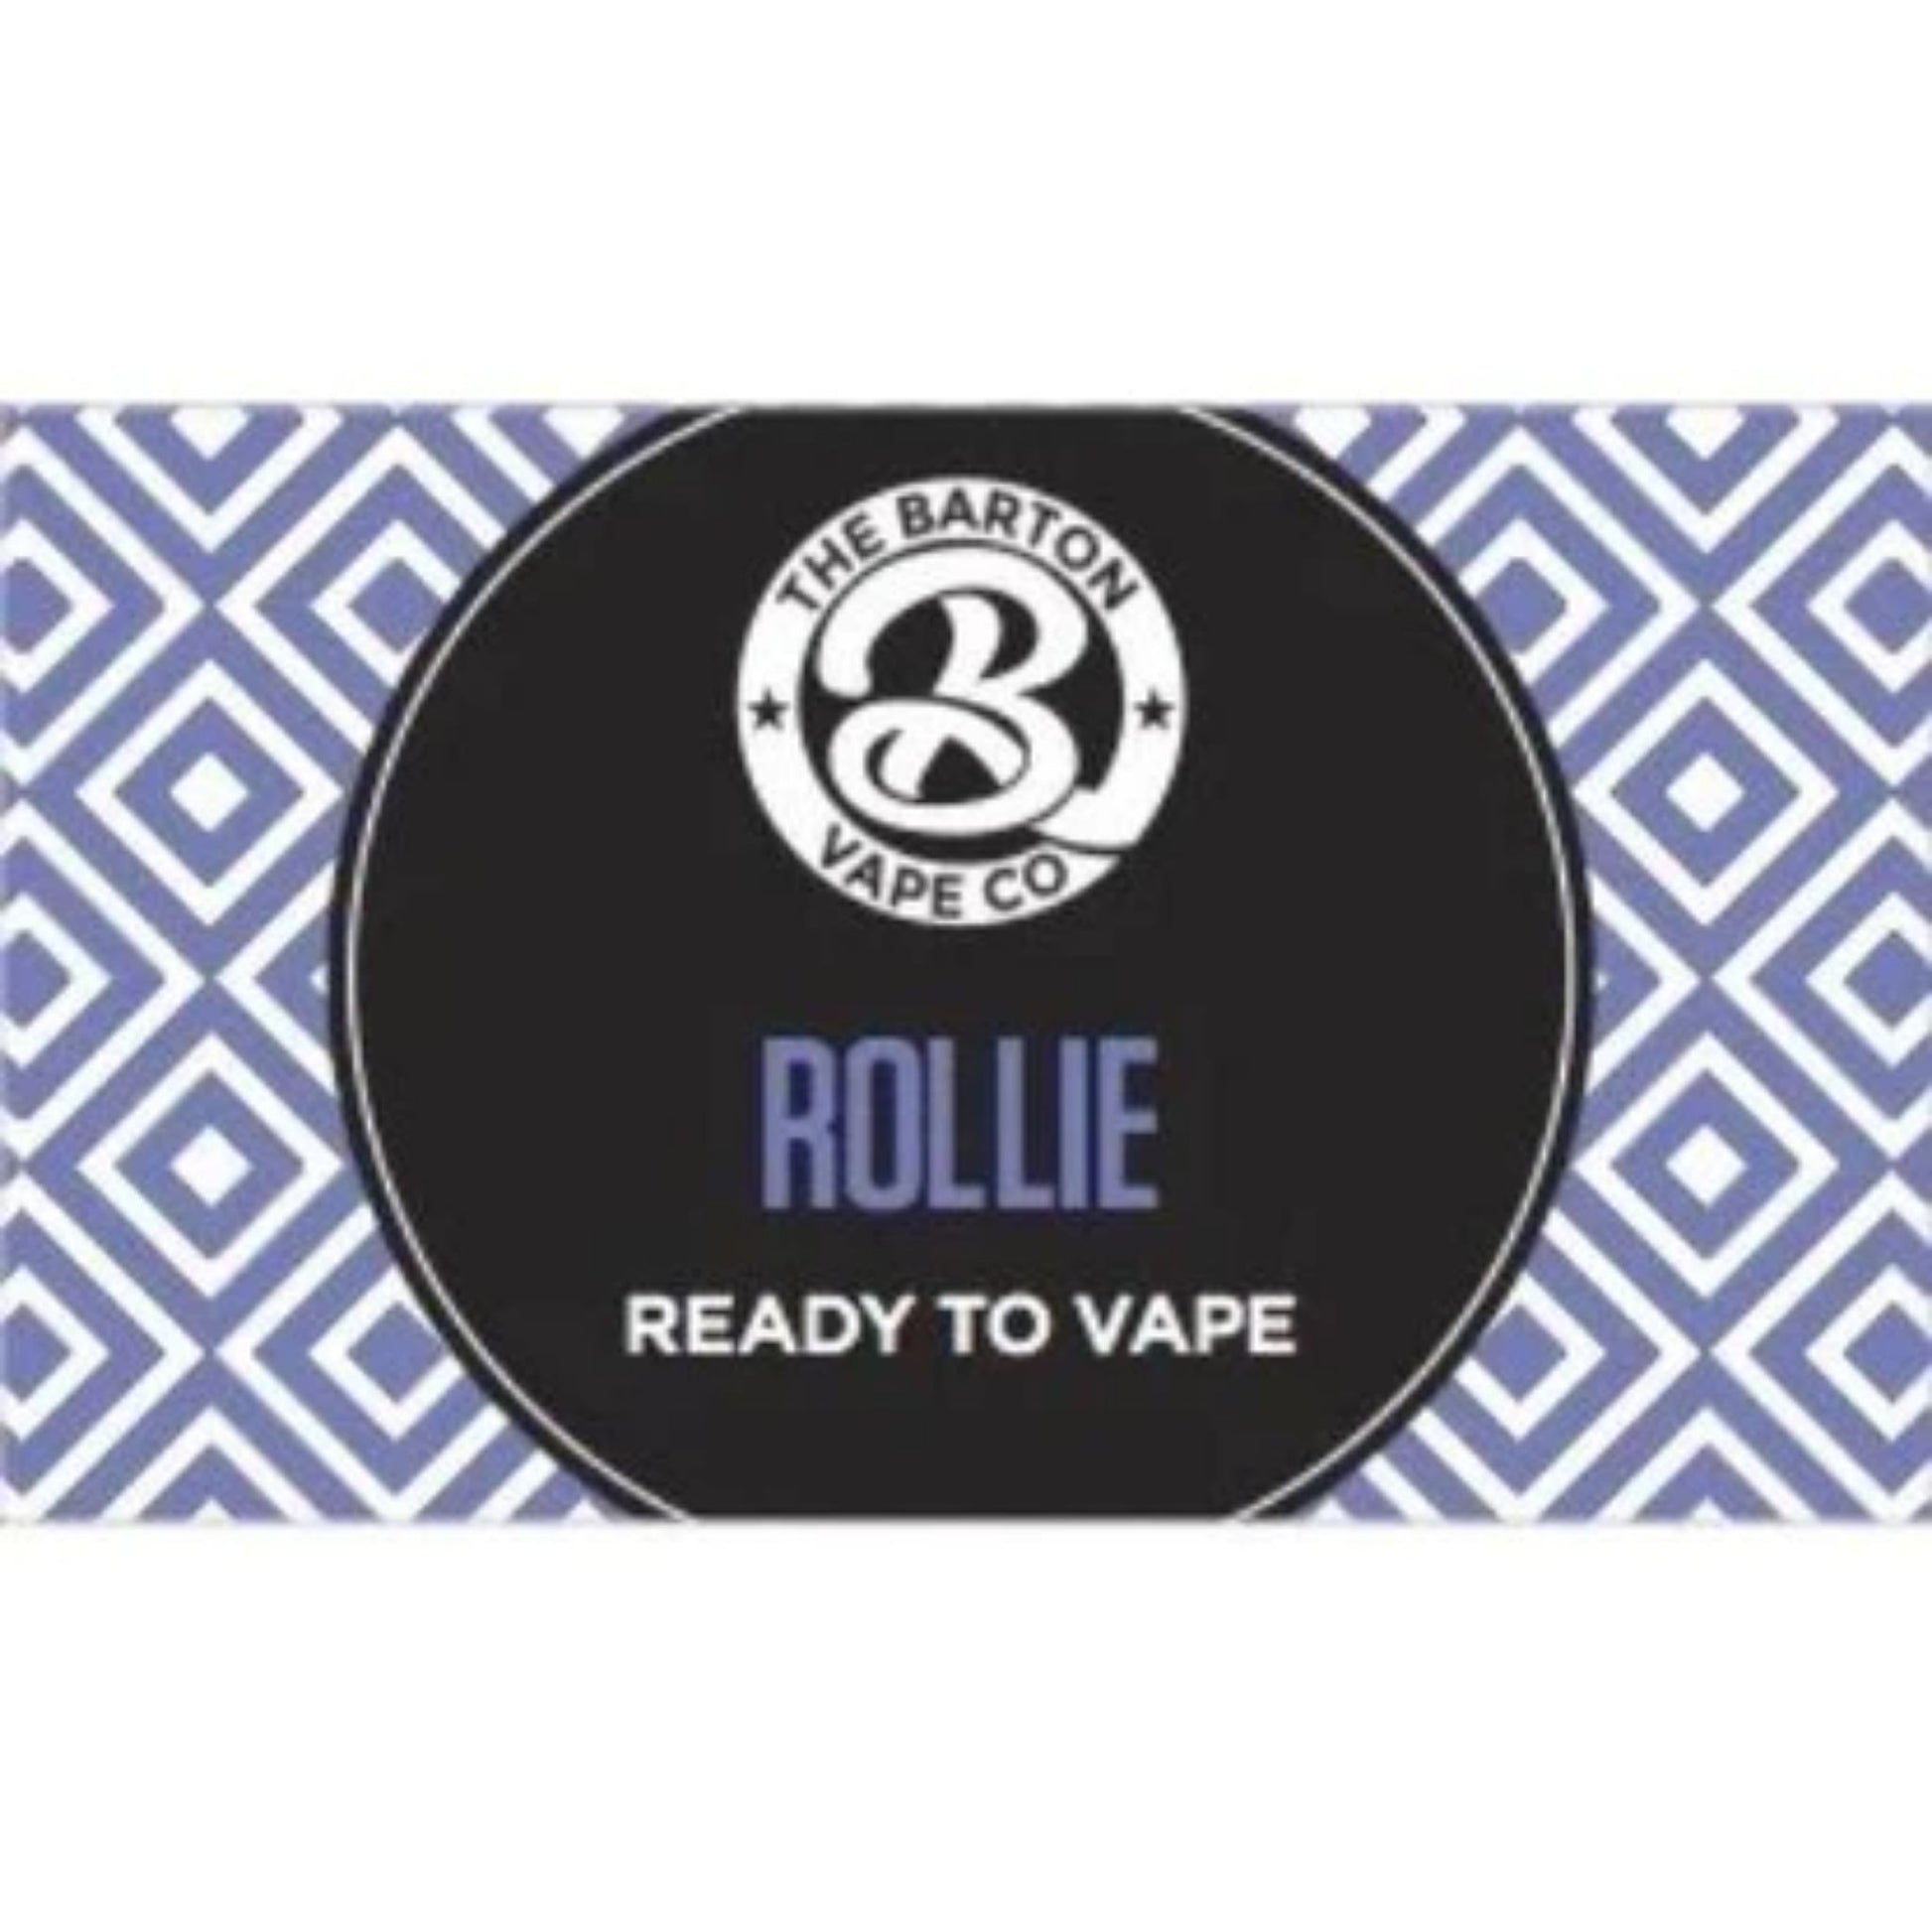 The Barton Vape Co | Rollie | 120ml label